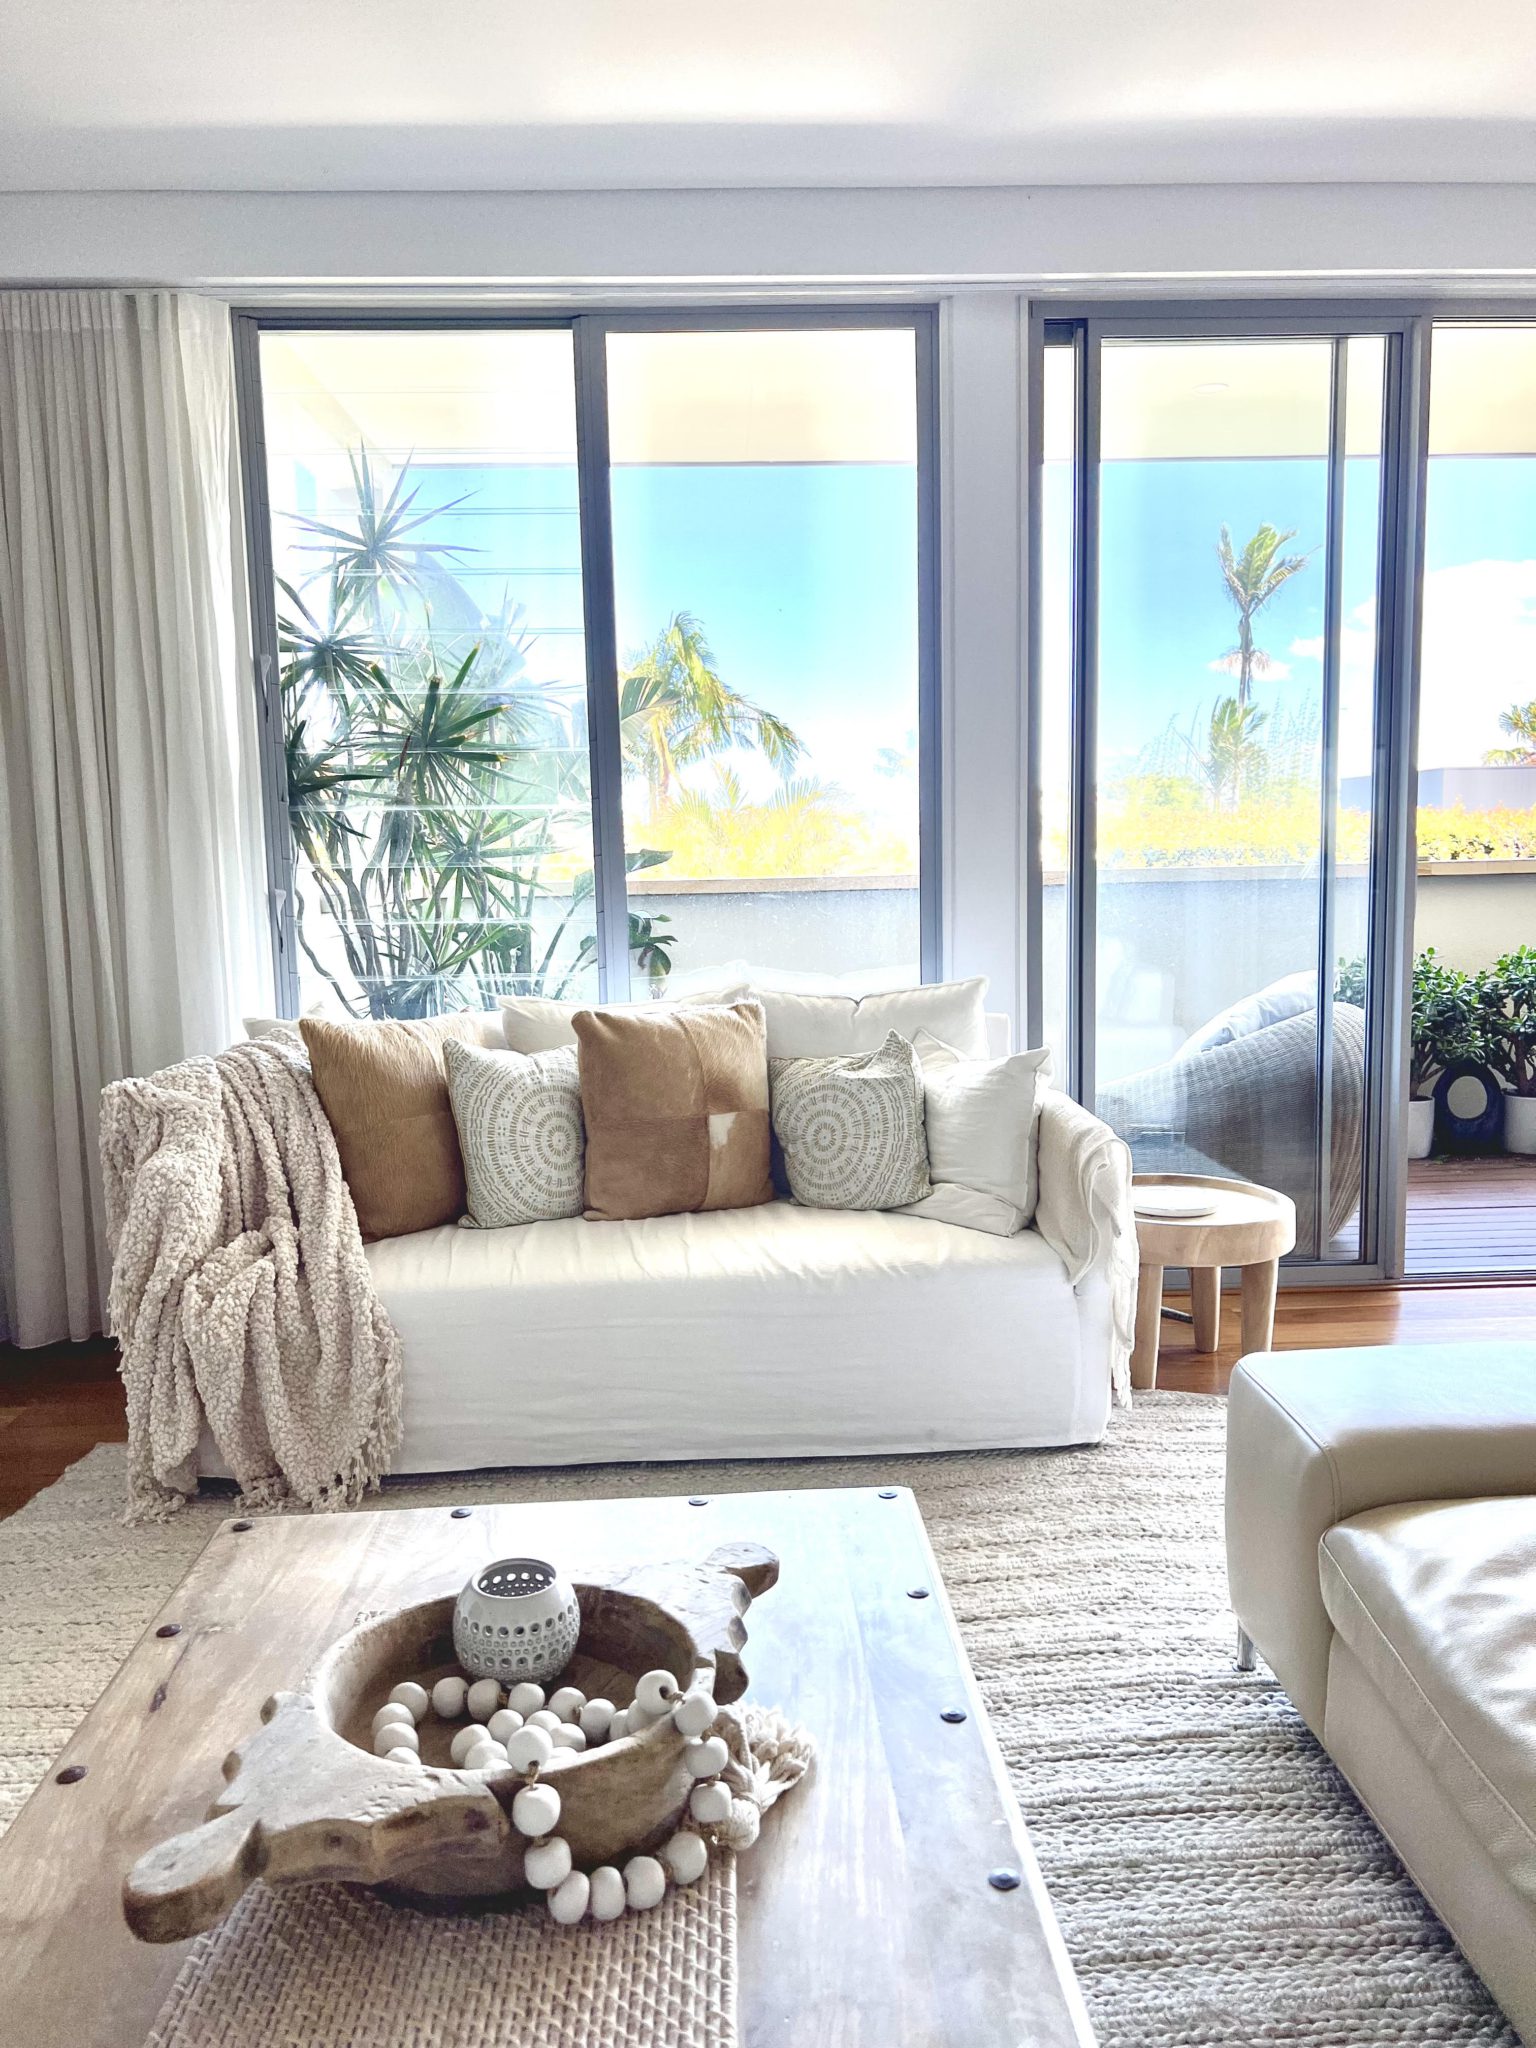 Contemporary Coastal Beach House with relaxed holiday vibe